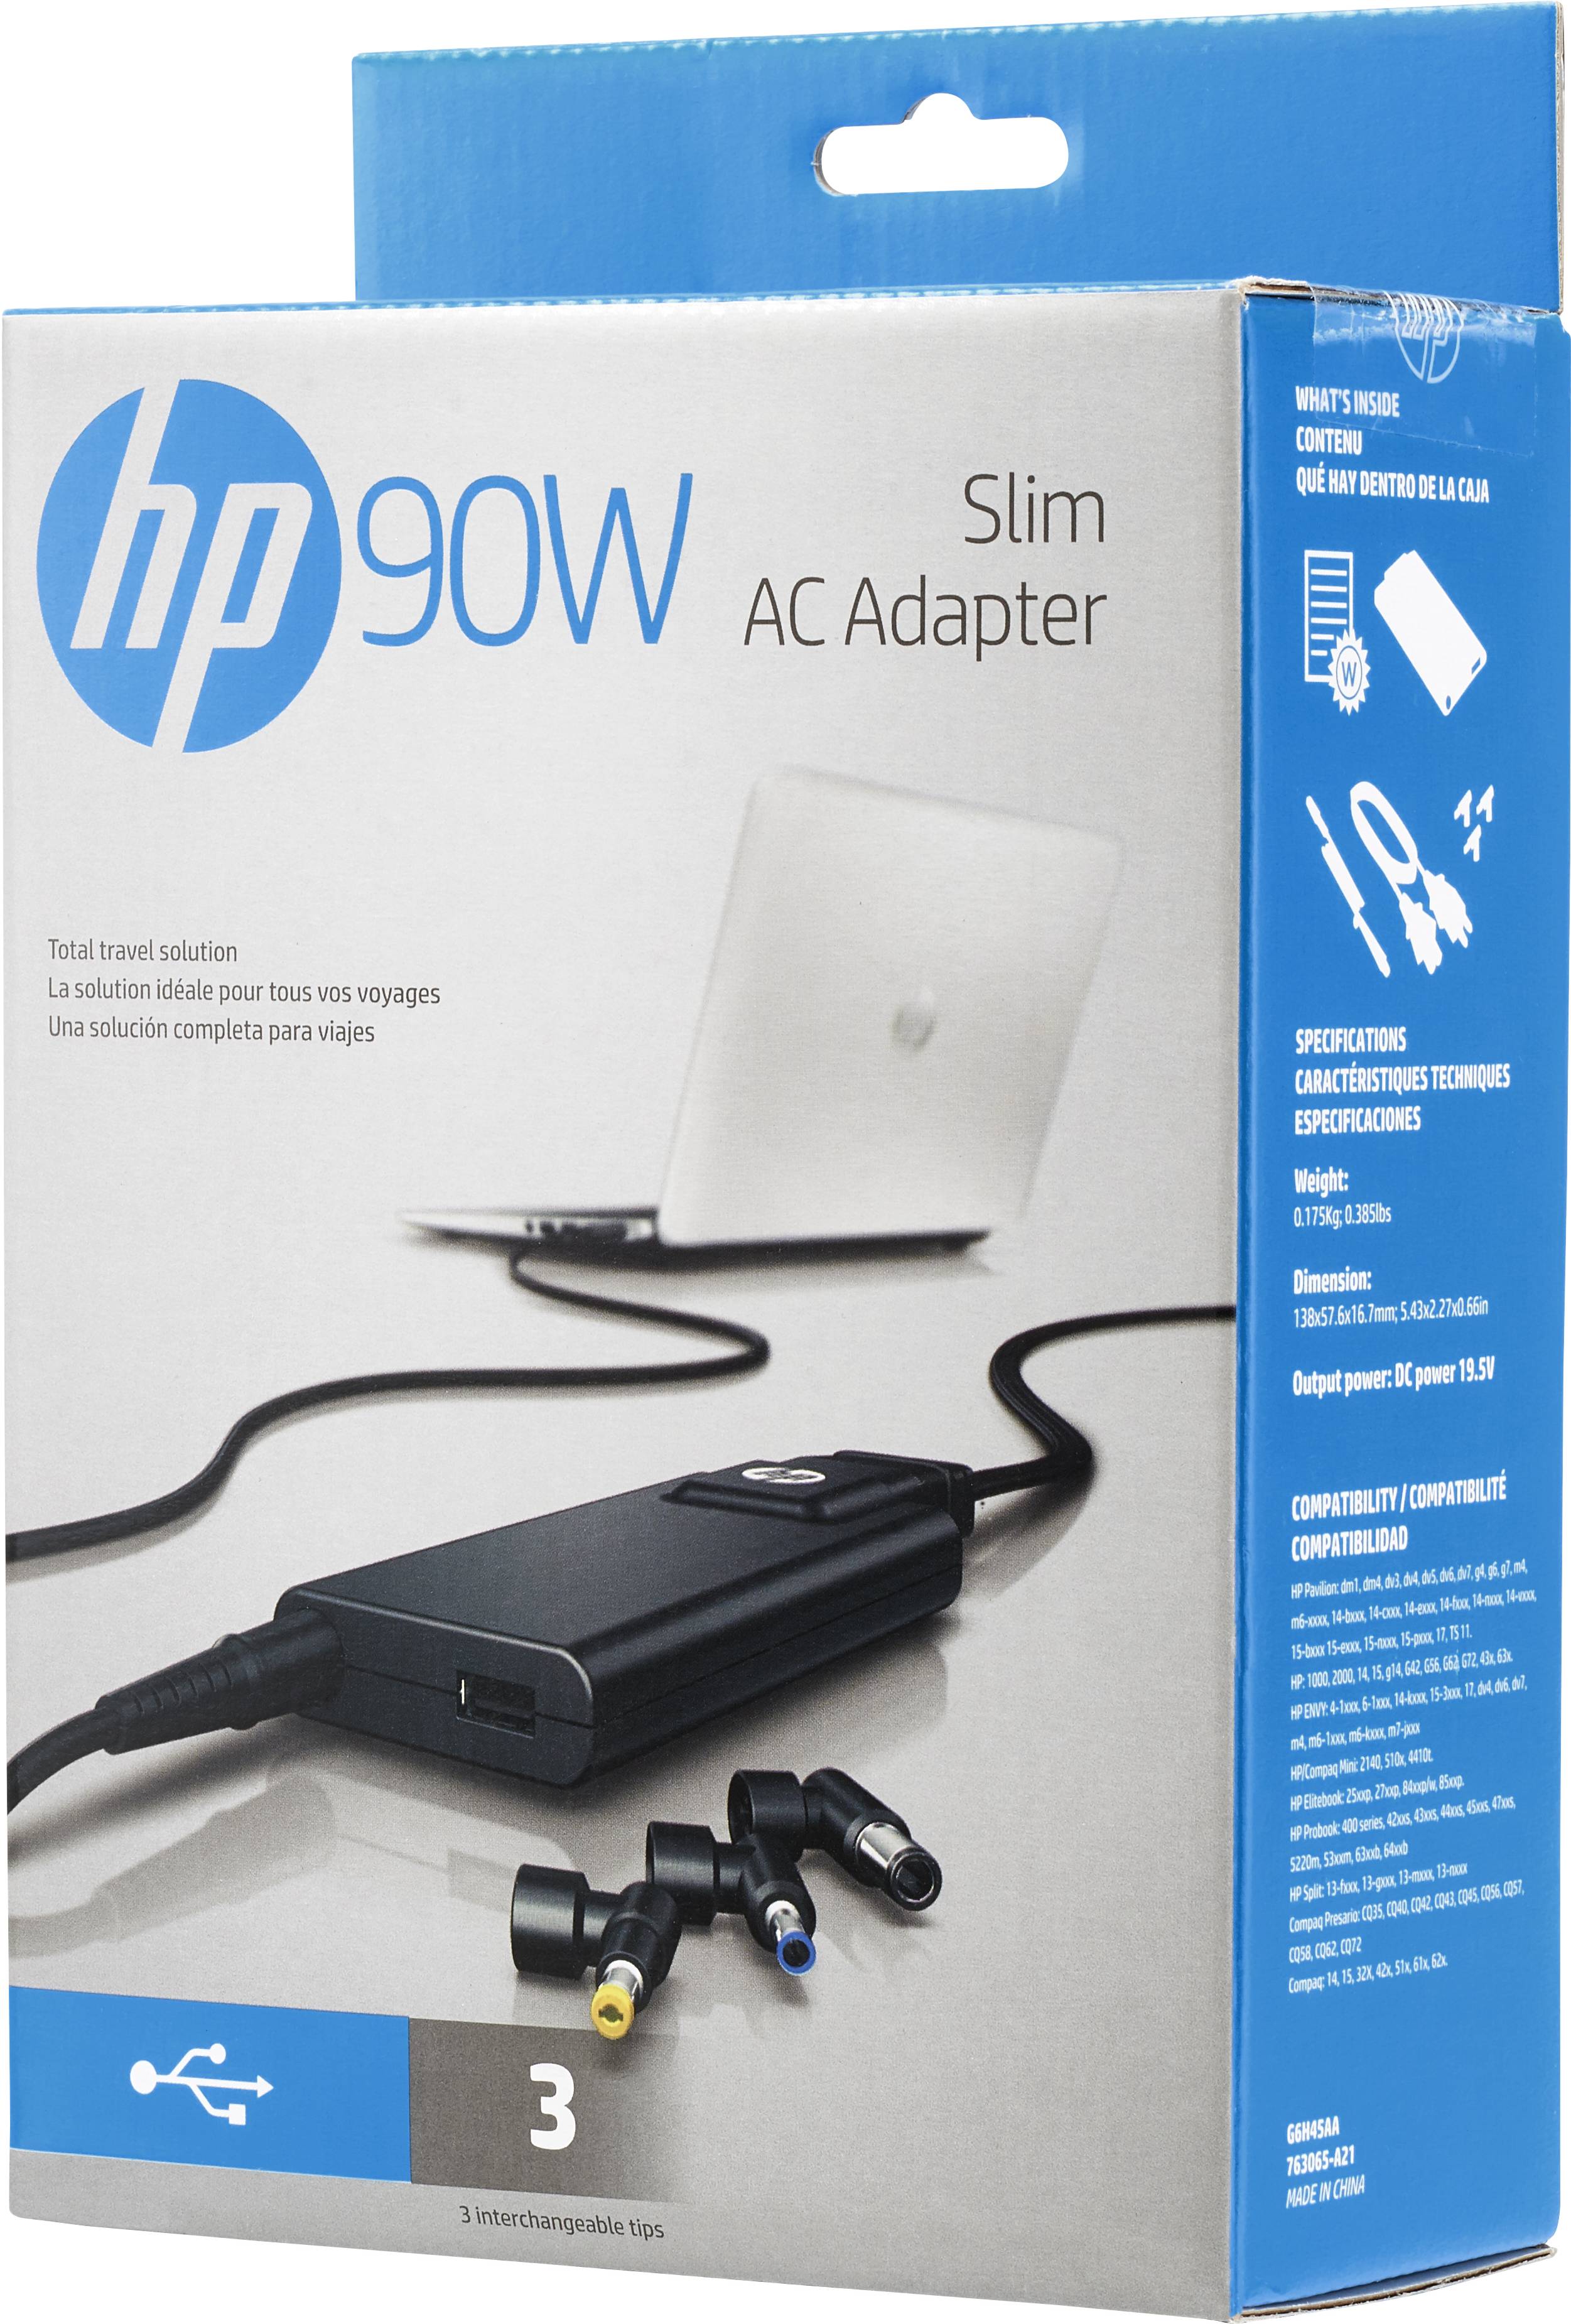 Rca Informatique - Image du produit : 90W SLIM W/USB AC ADAPTER .